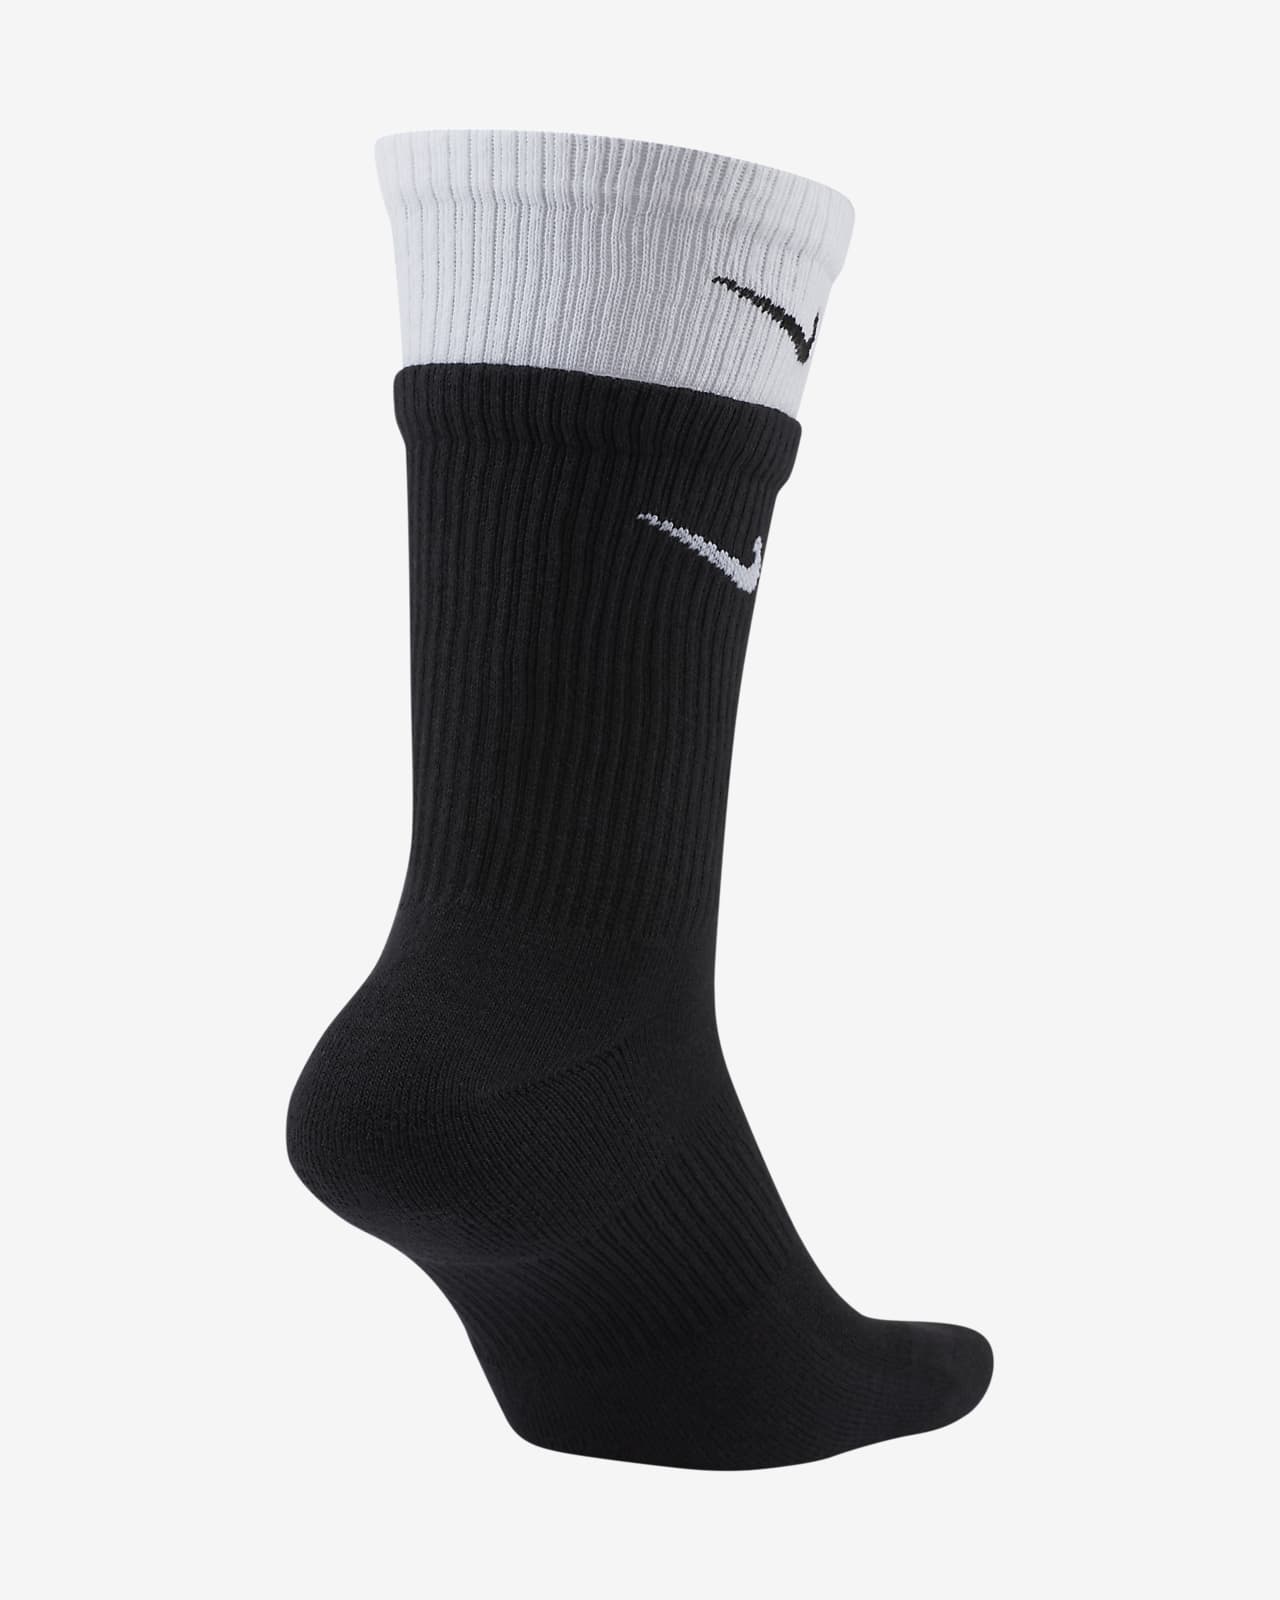 Nike Cushion Crew Socks Clearance Prices, Save 68% | jlcatj.gob.mx